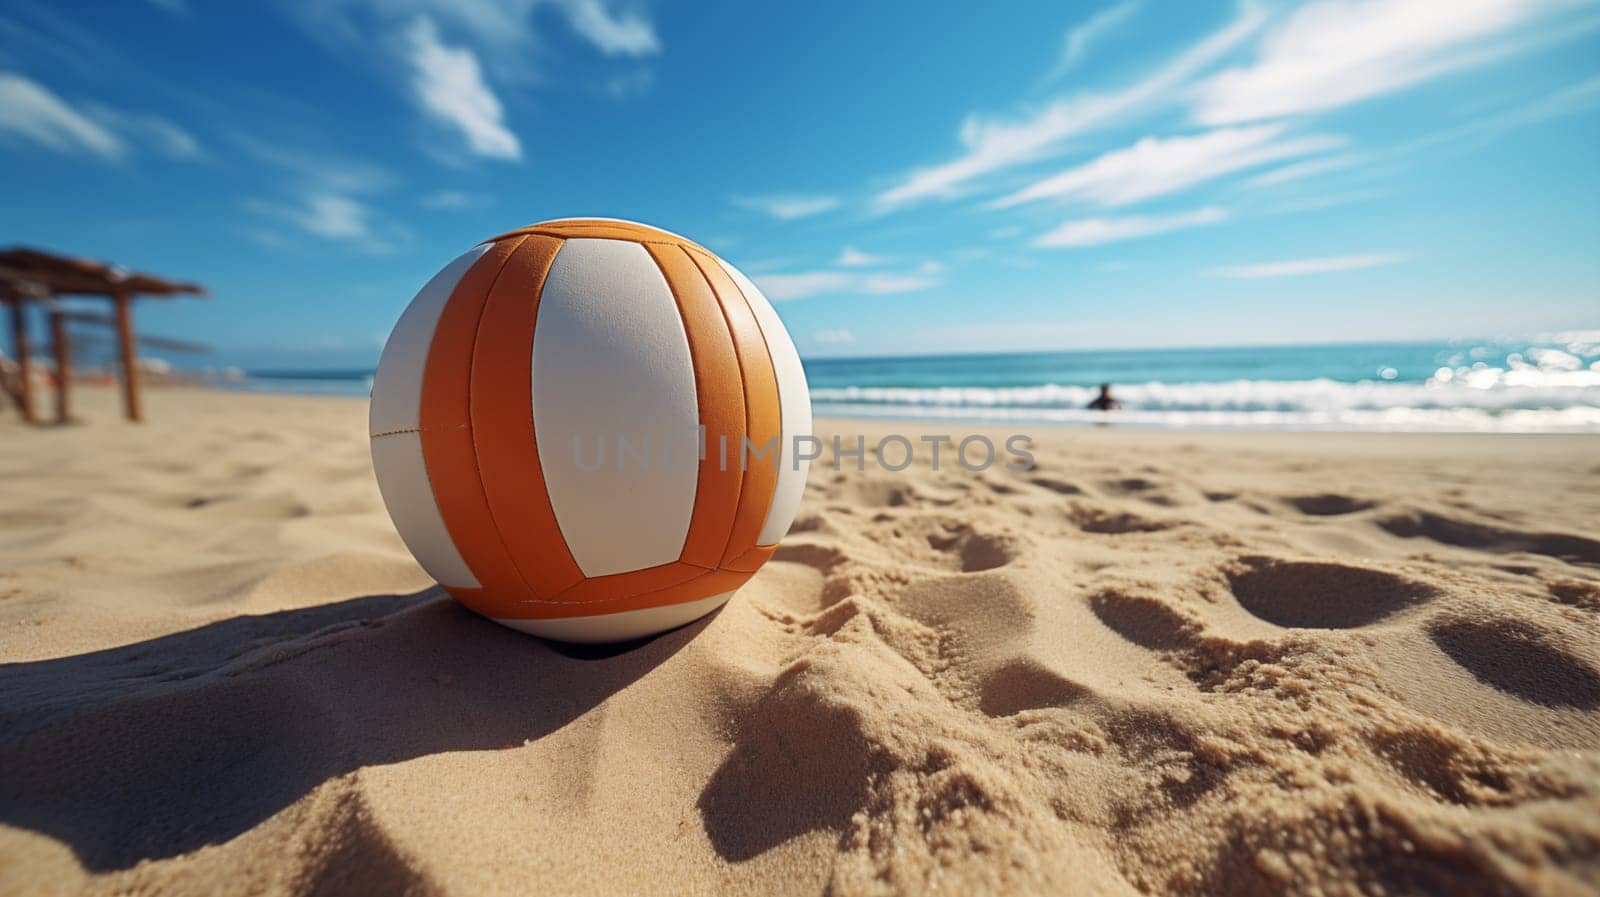 A white-orange volleyball lies on a sandy beach by Zakharova